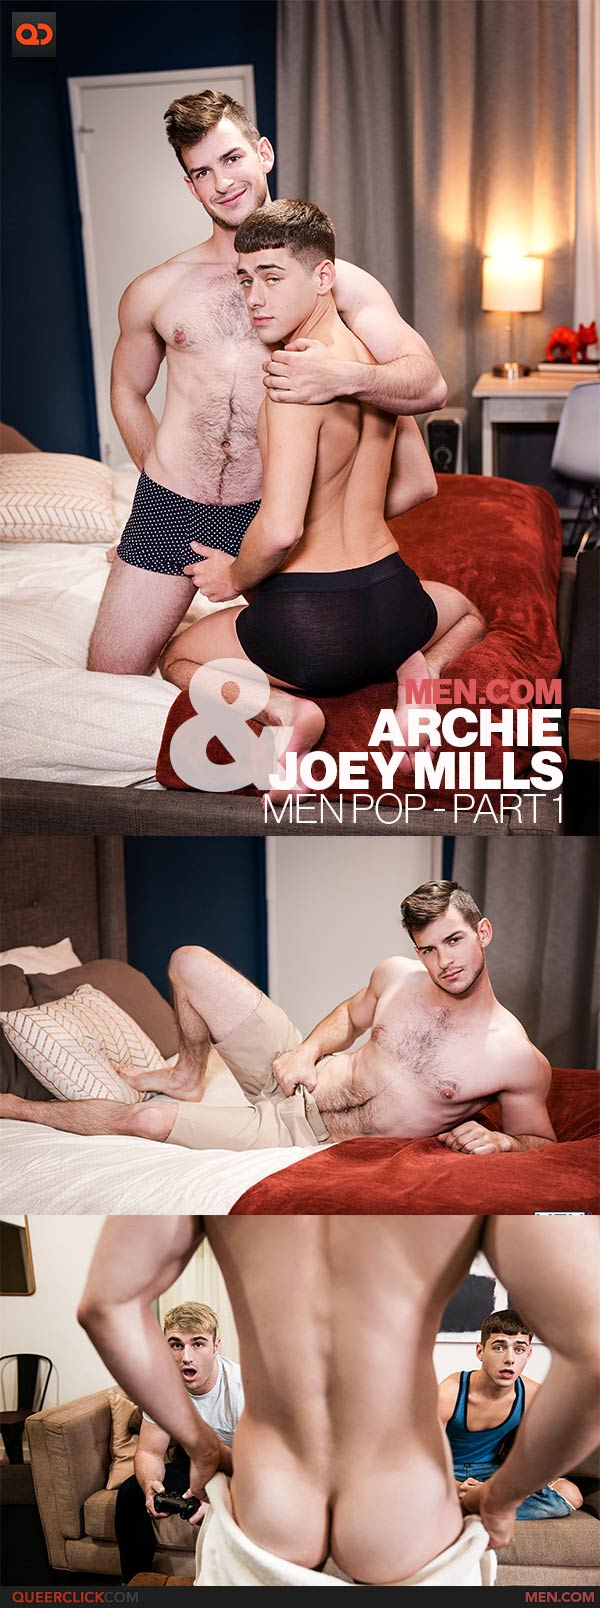 Men.com: Joey Mills and Archie